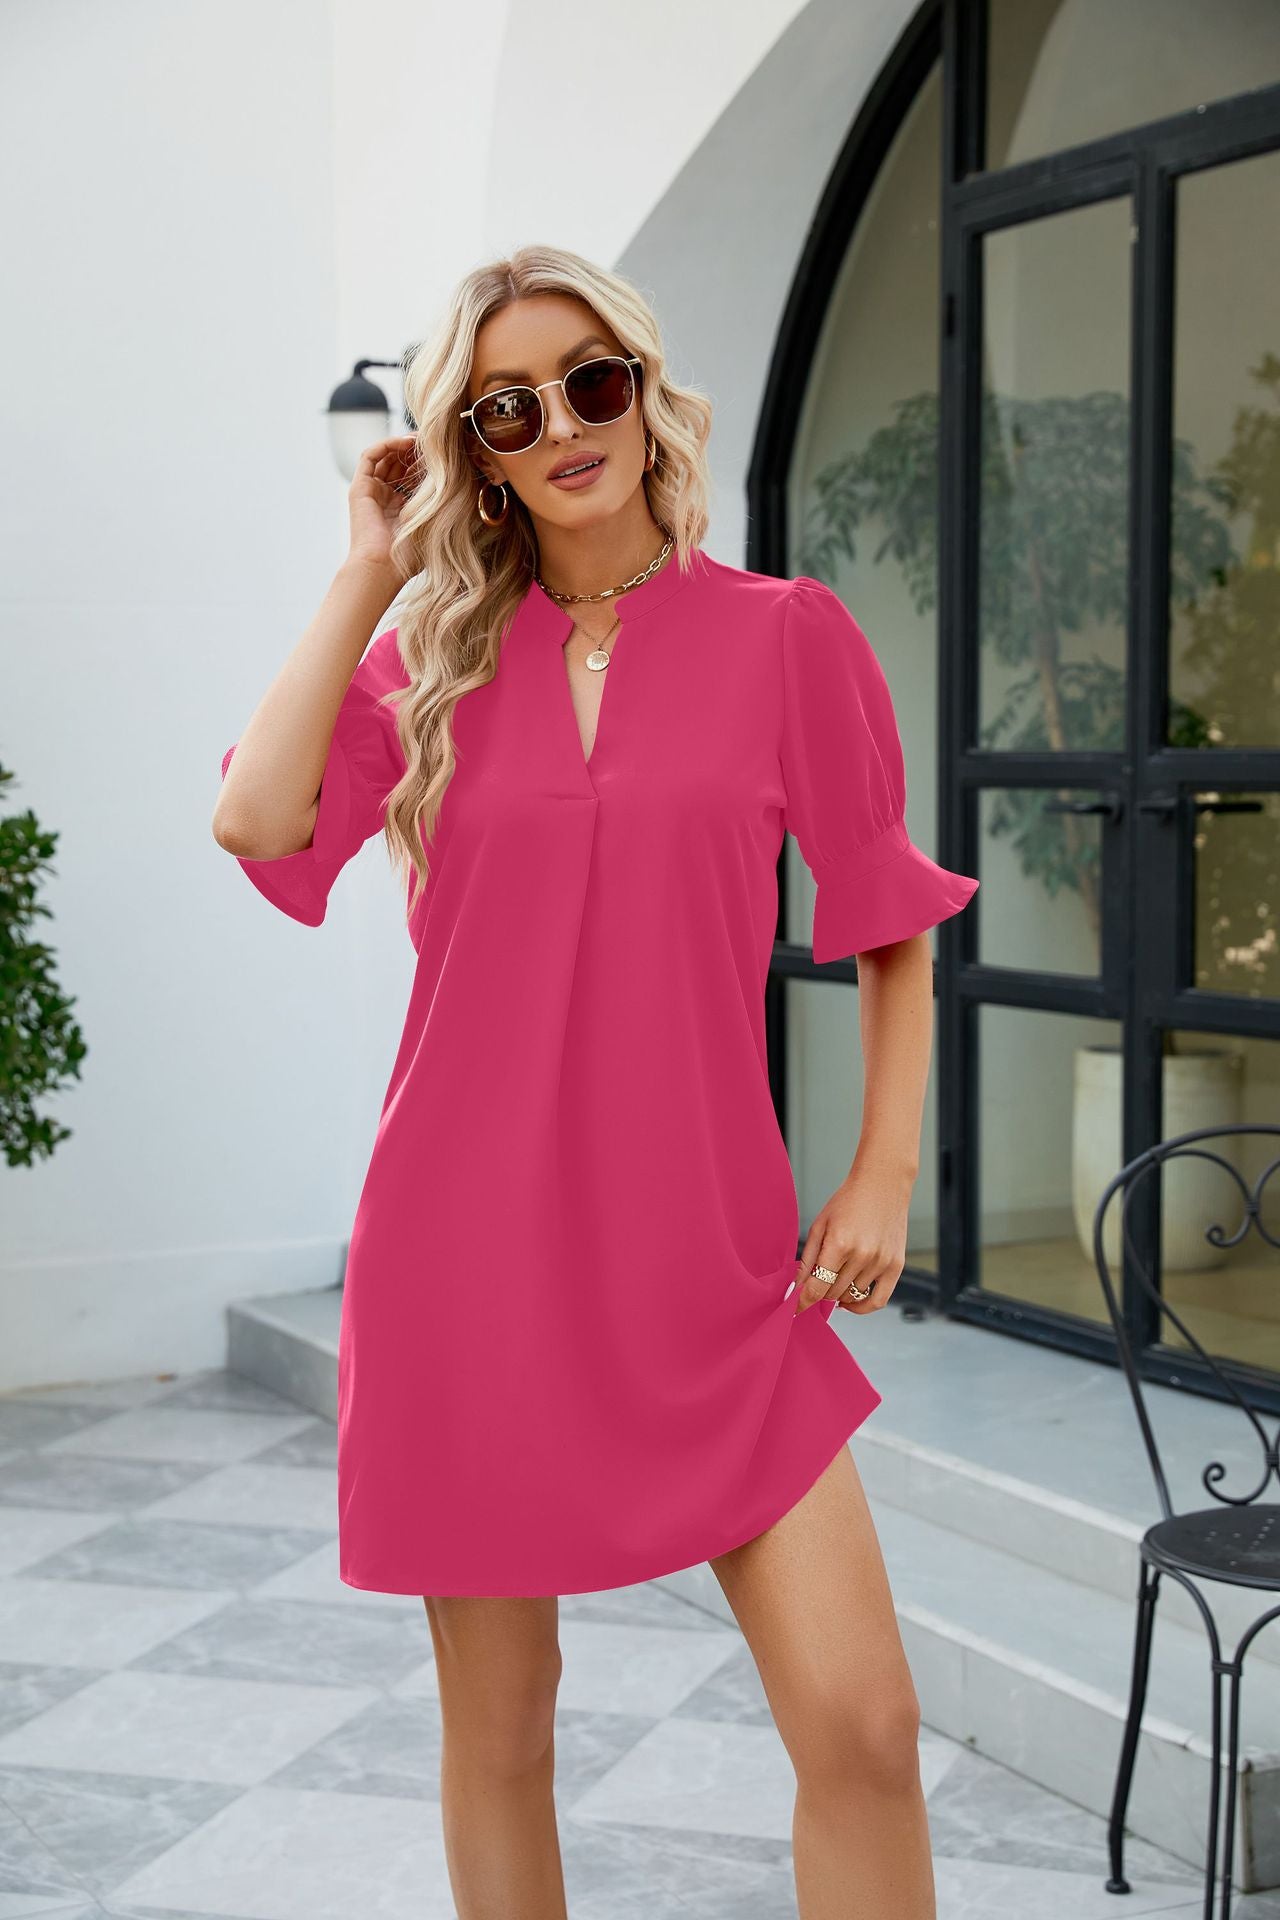 Notched Neck Flounce Sleeve Mini Dress (5 Colors)  Krazy Heart Designs Boutique Hot Pink S 